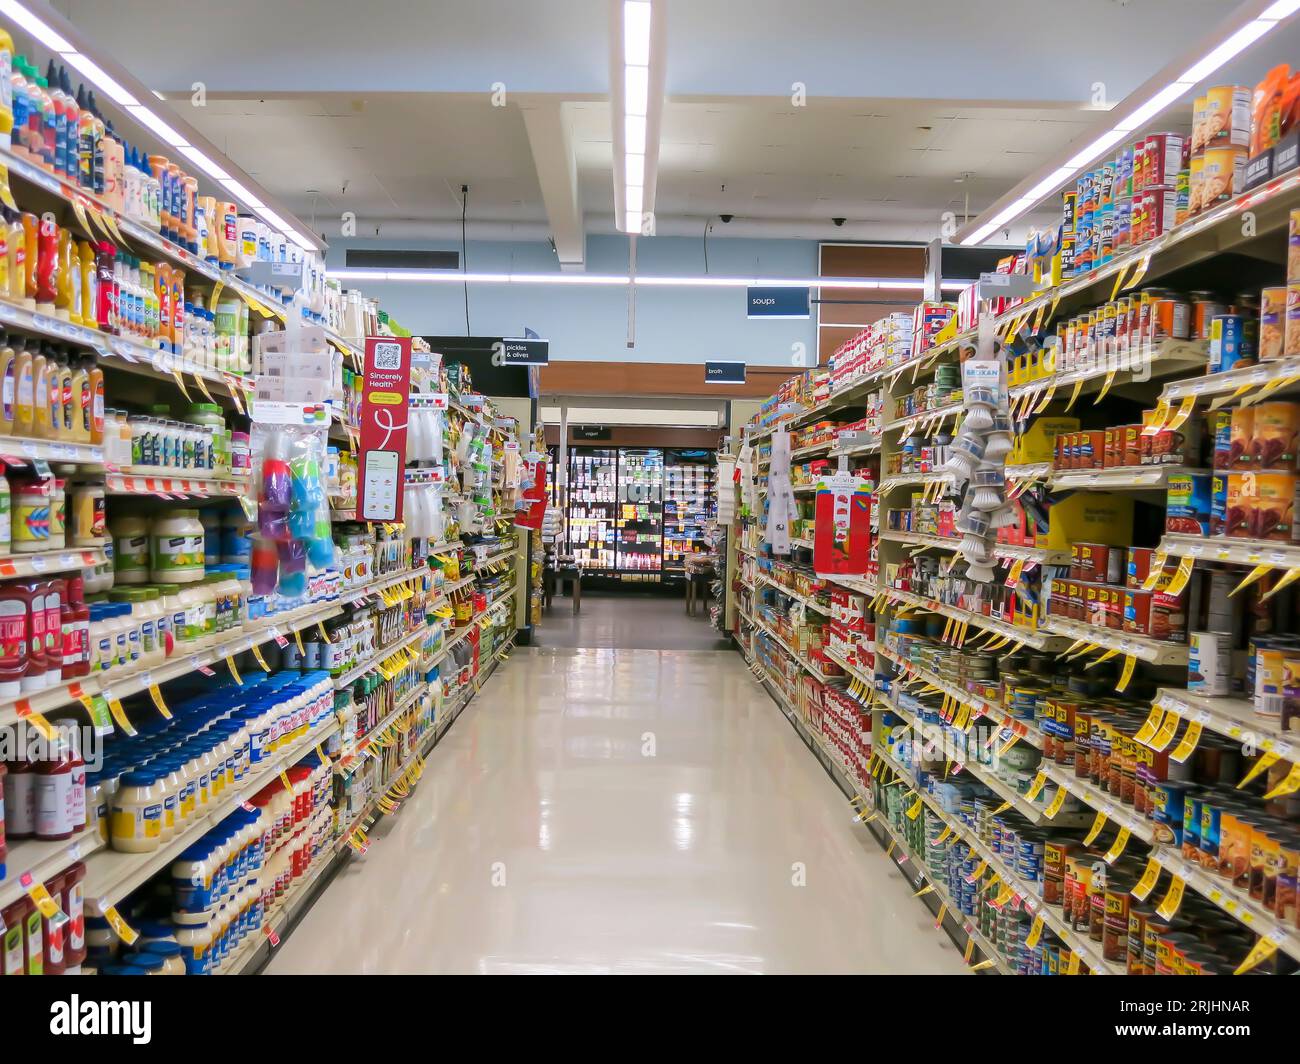 AmView of Merchandize Aisle in Supermarket Stock Photo